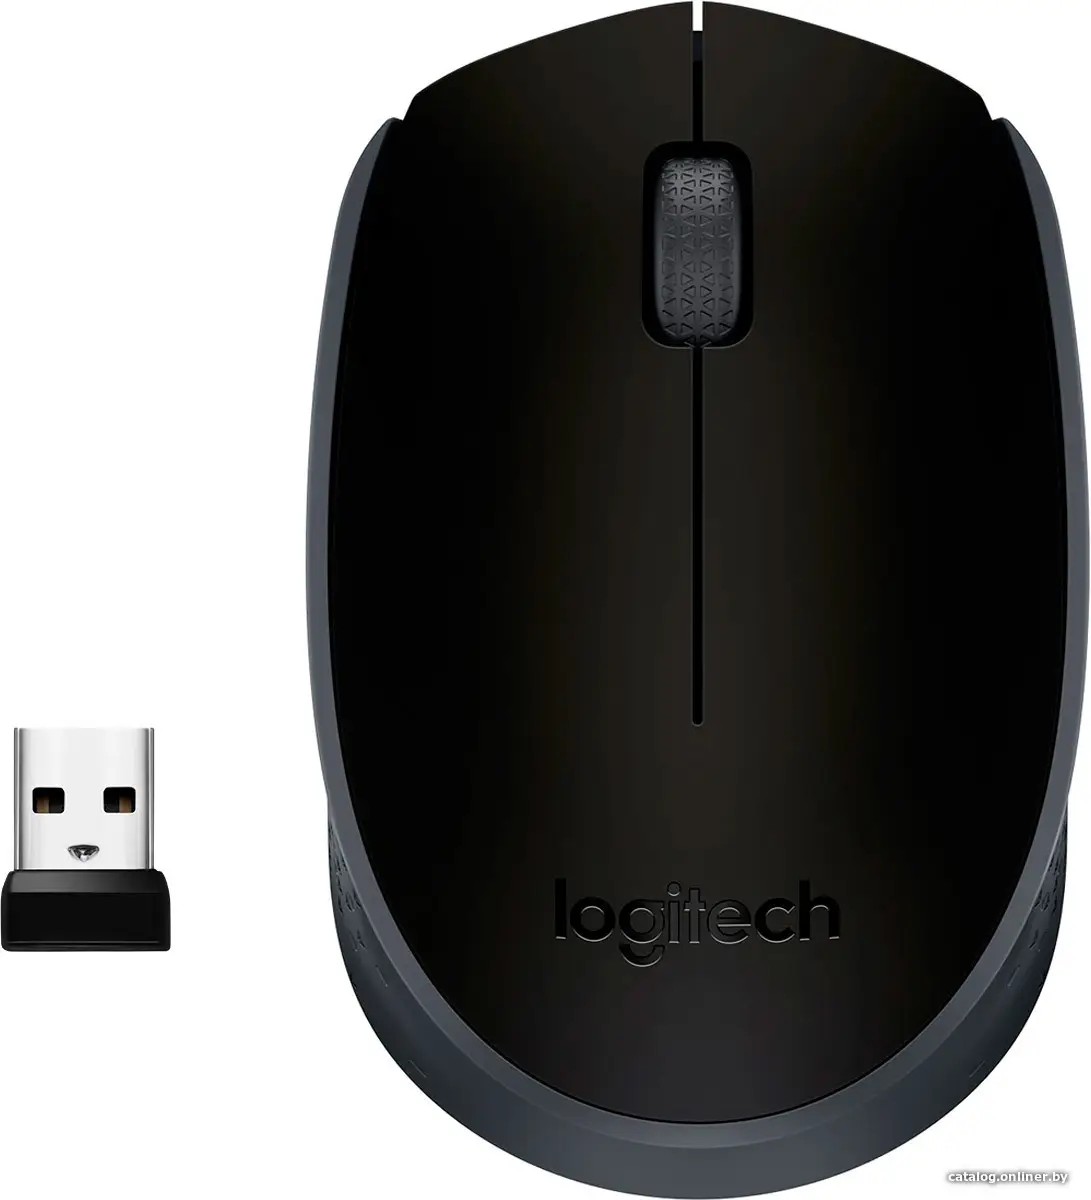 Мышь Logitech M171 Wireless Mouse серый/черный [910-004424]